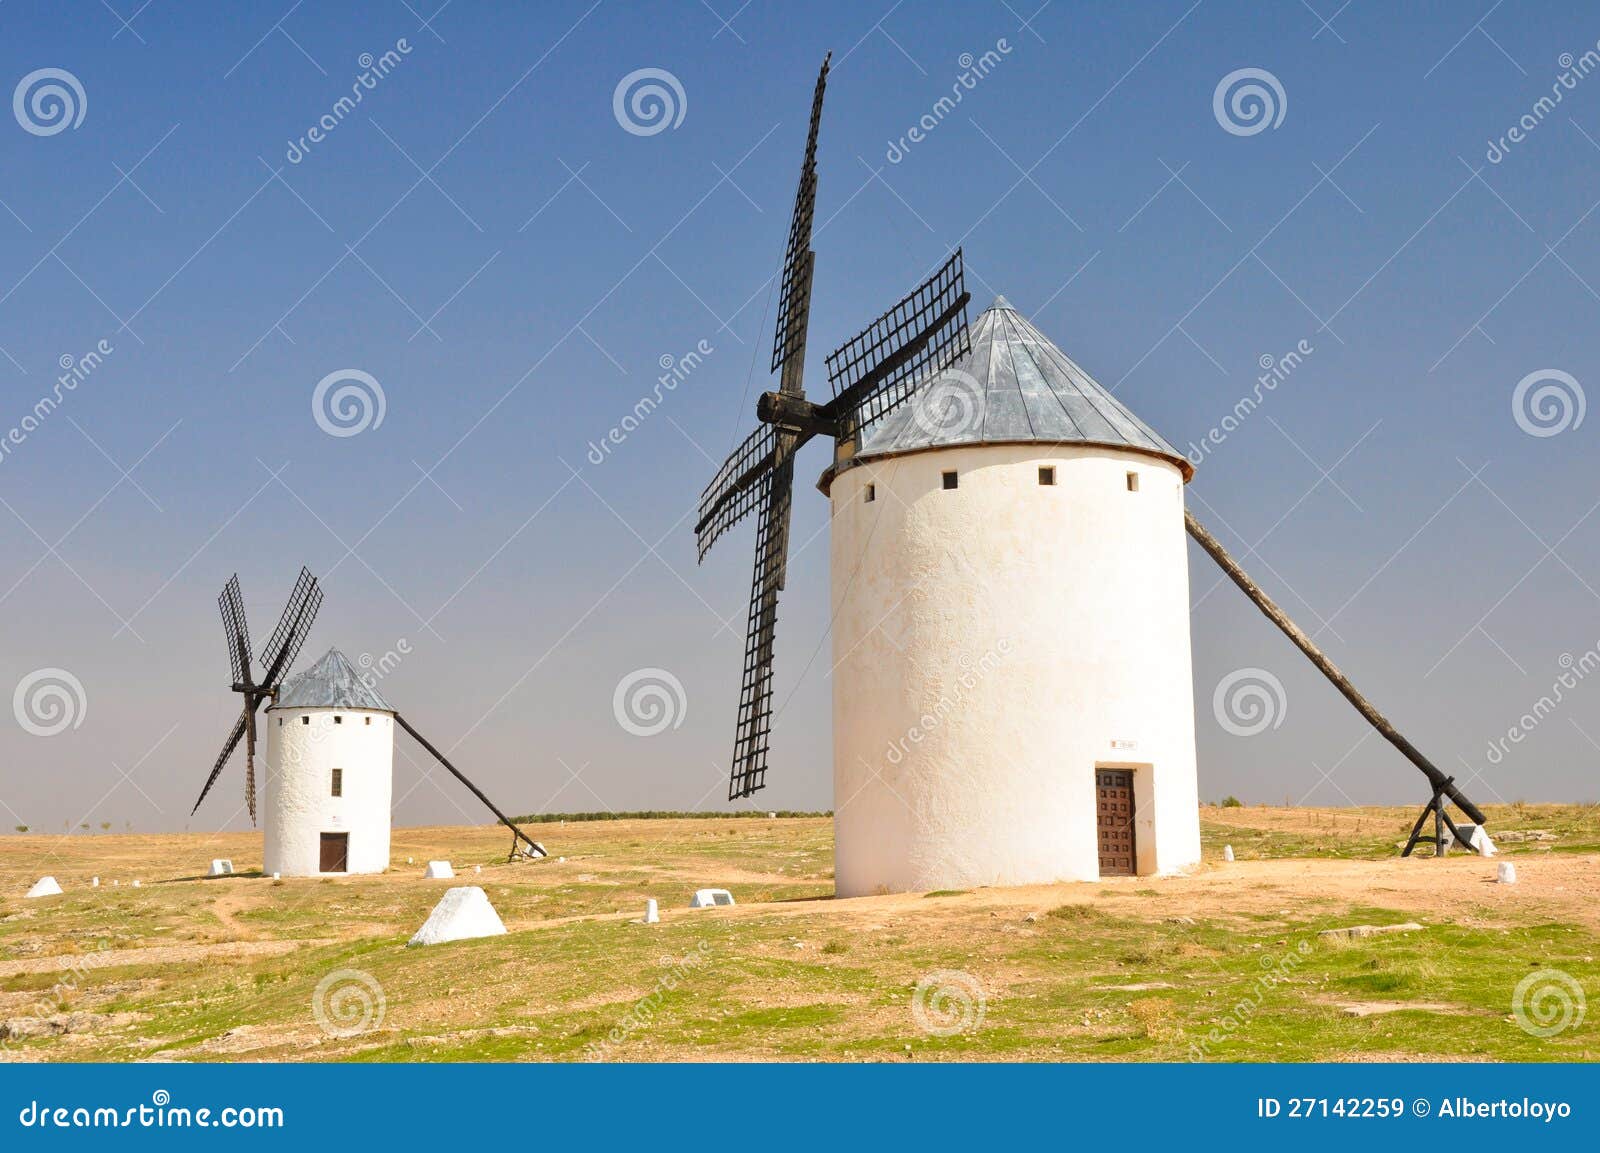 windmills in campo de criptana (spain)